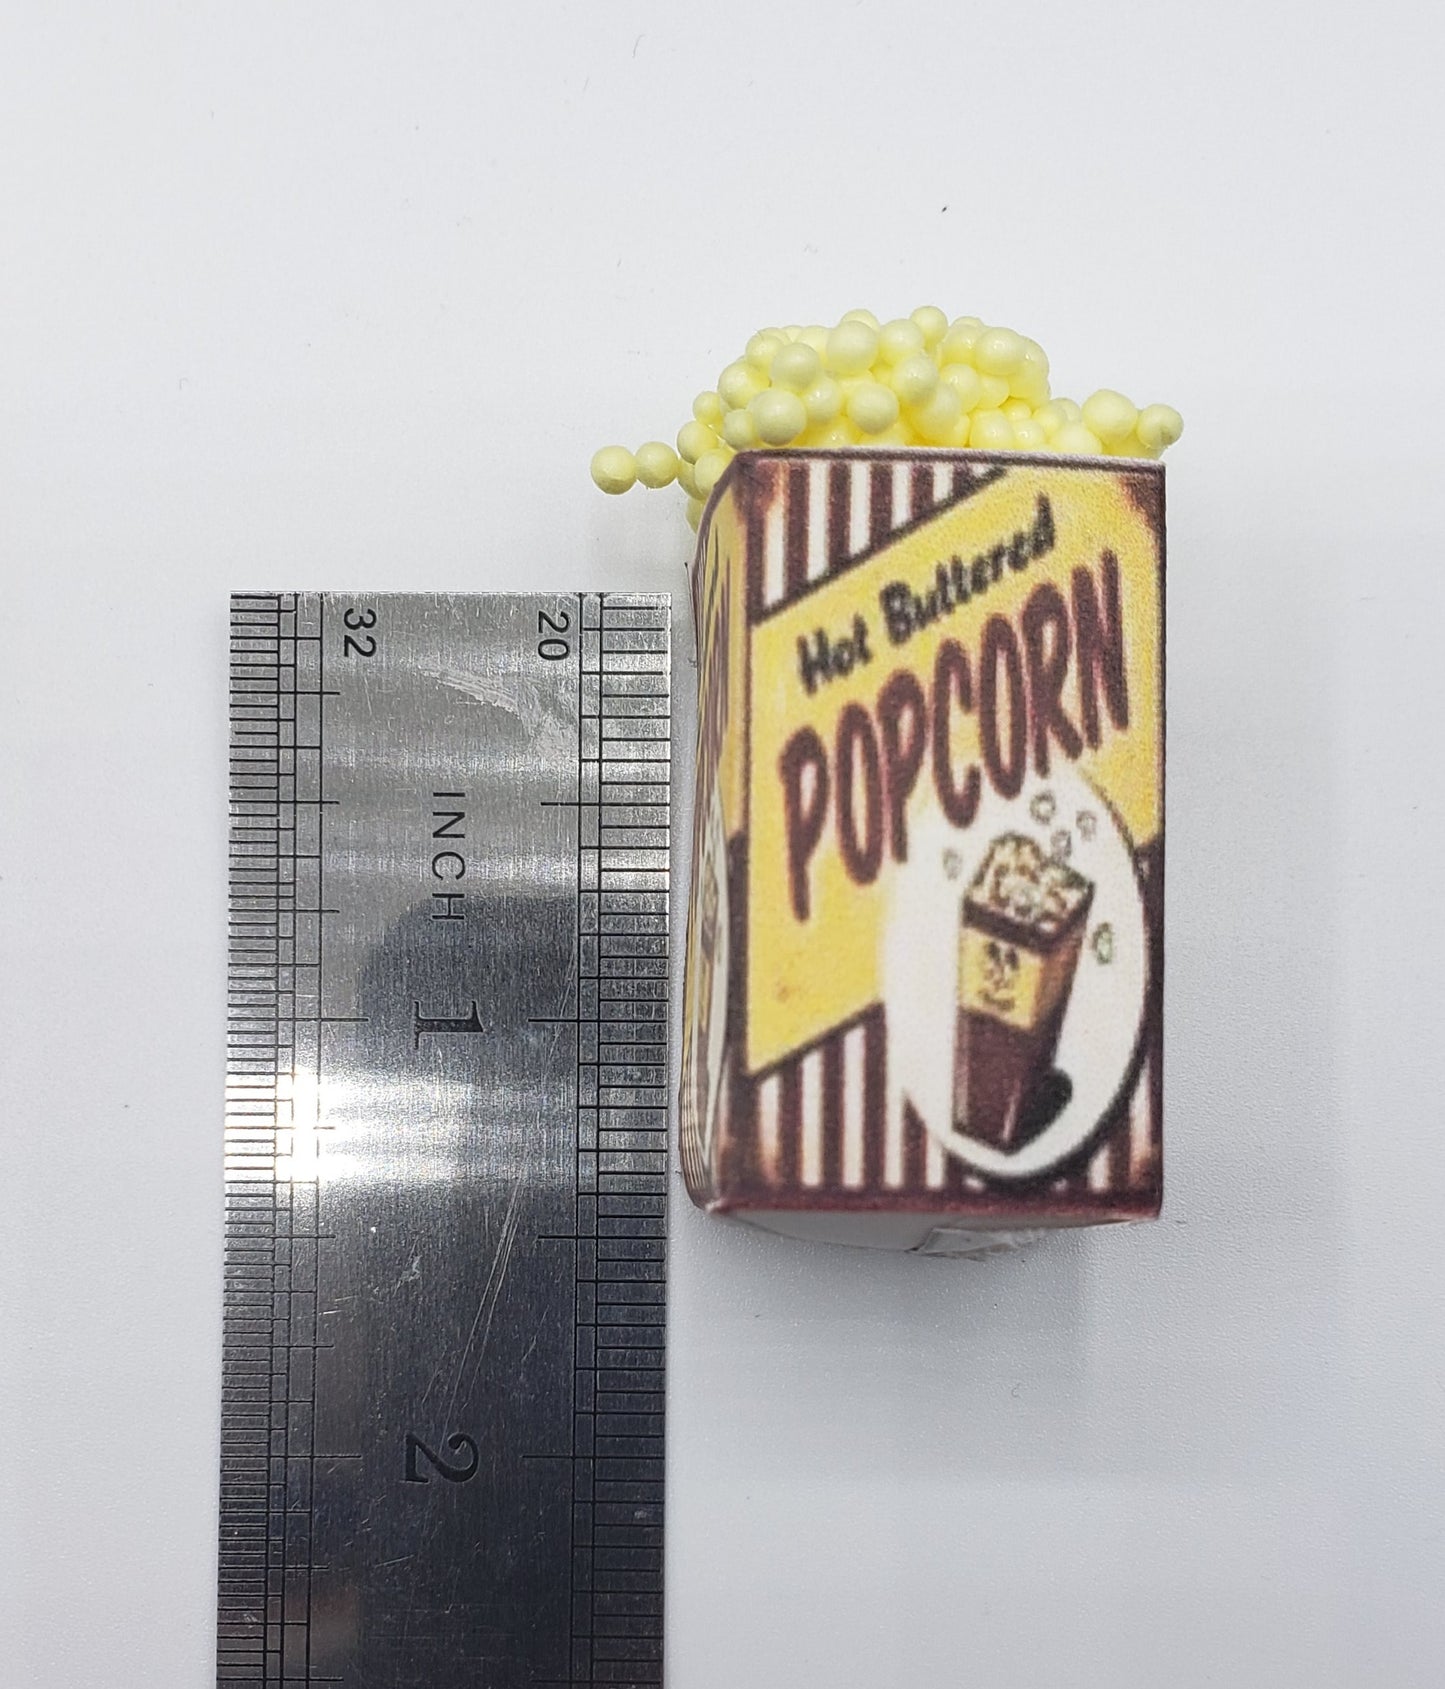 Thin popcorn